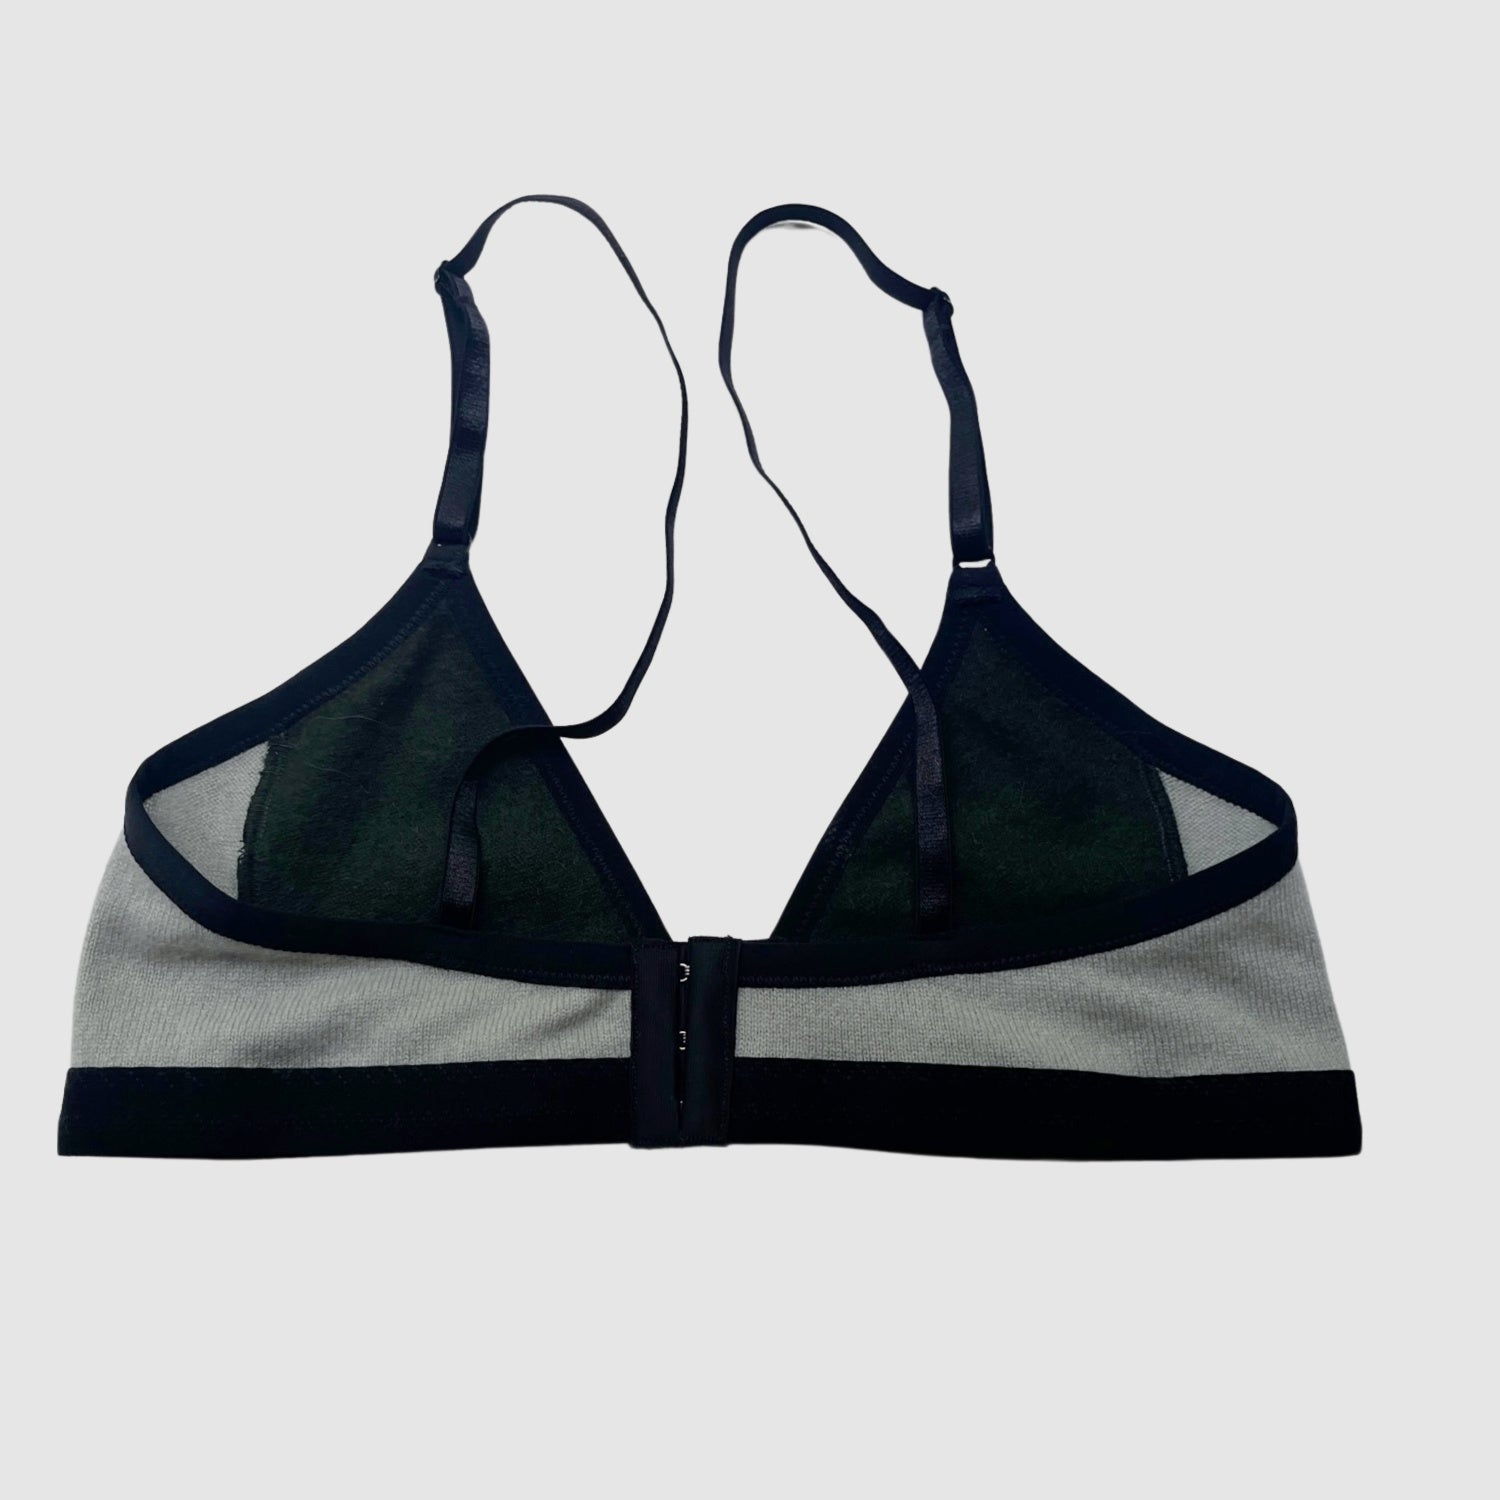 shop Green Cashmere bra size Small/Medium | Ready to ship cashmere lingerie 